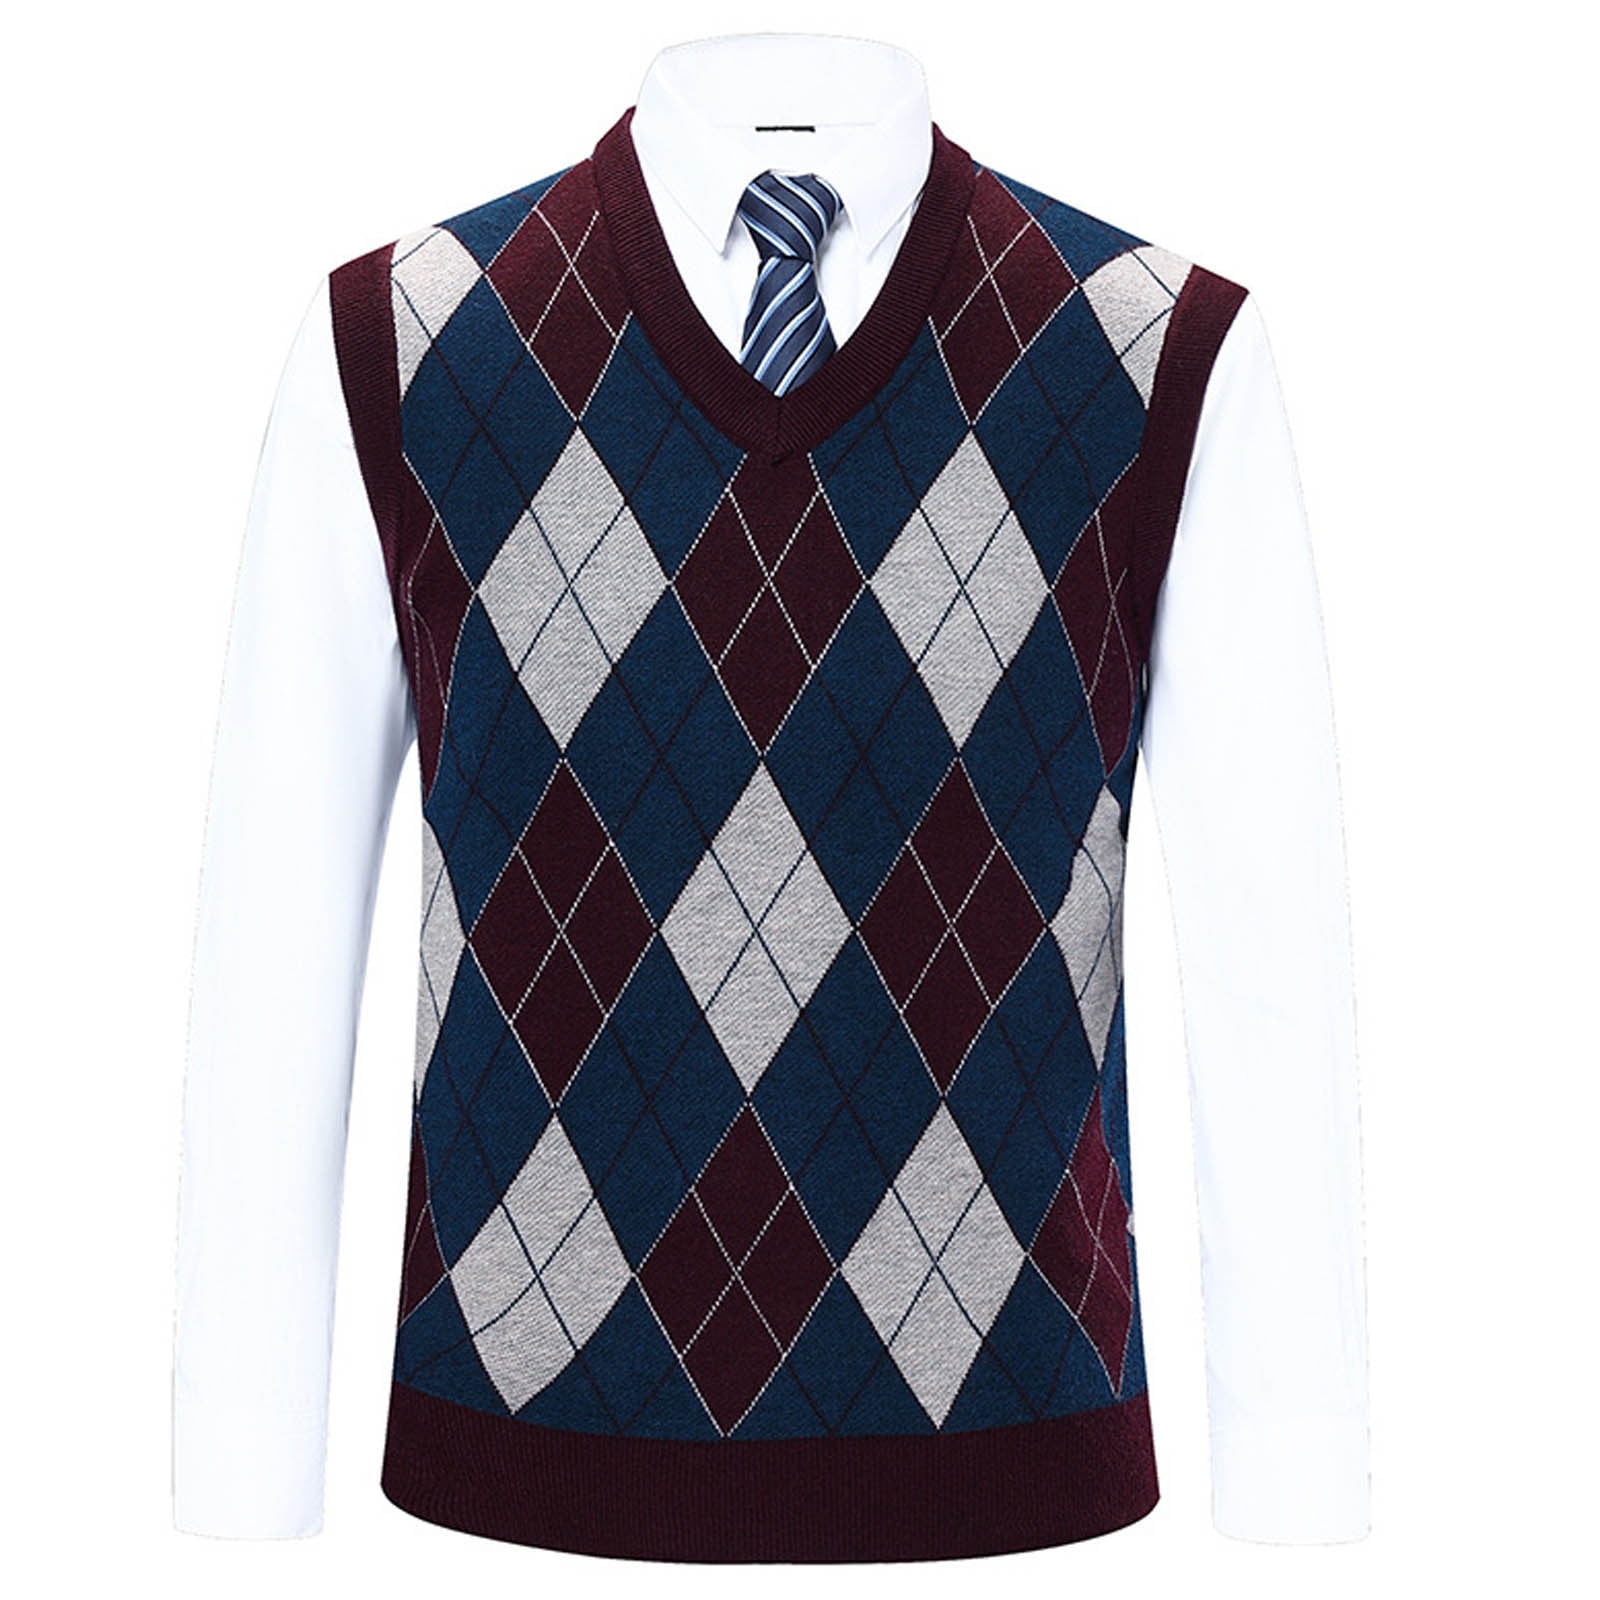 GiliGiliso Men Casual Sweater Vest Uniform Pullover Cotton Knit V-Neck ...